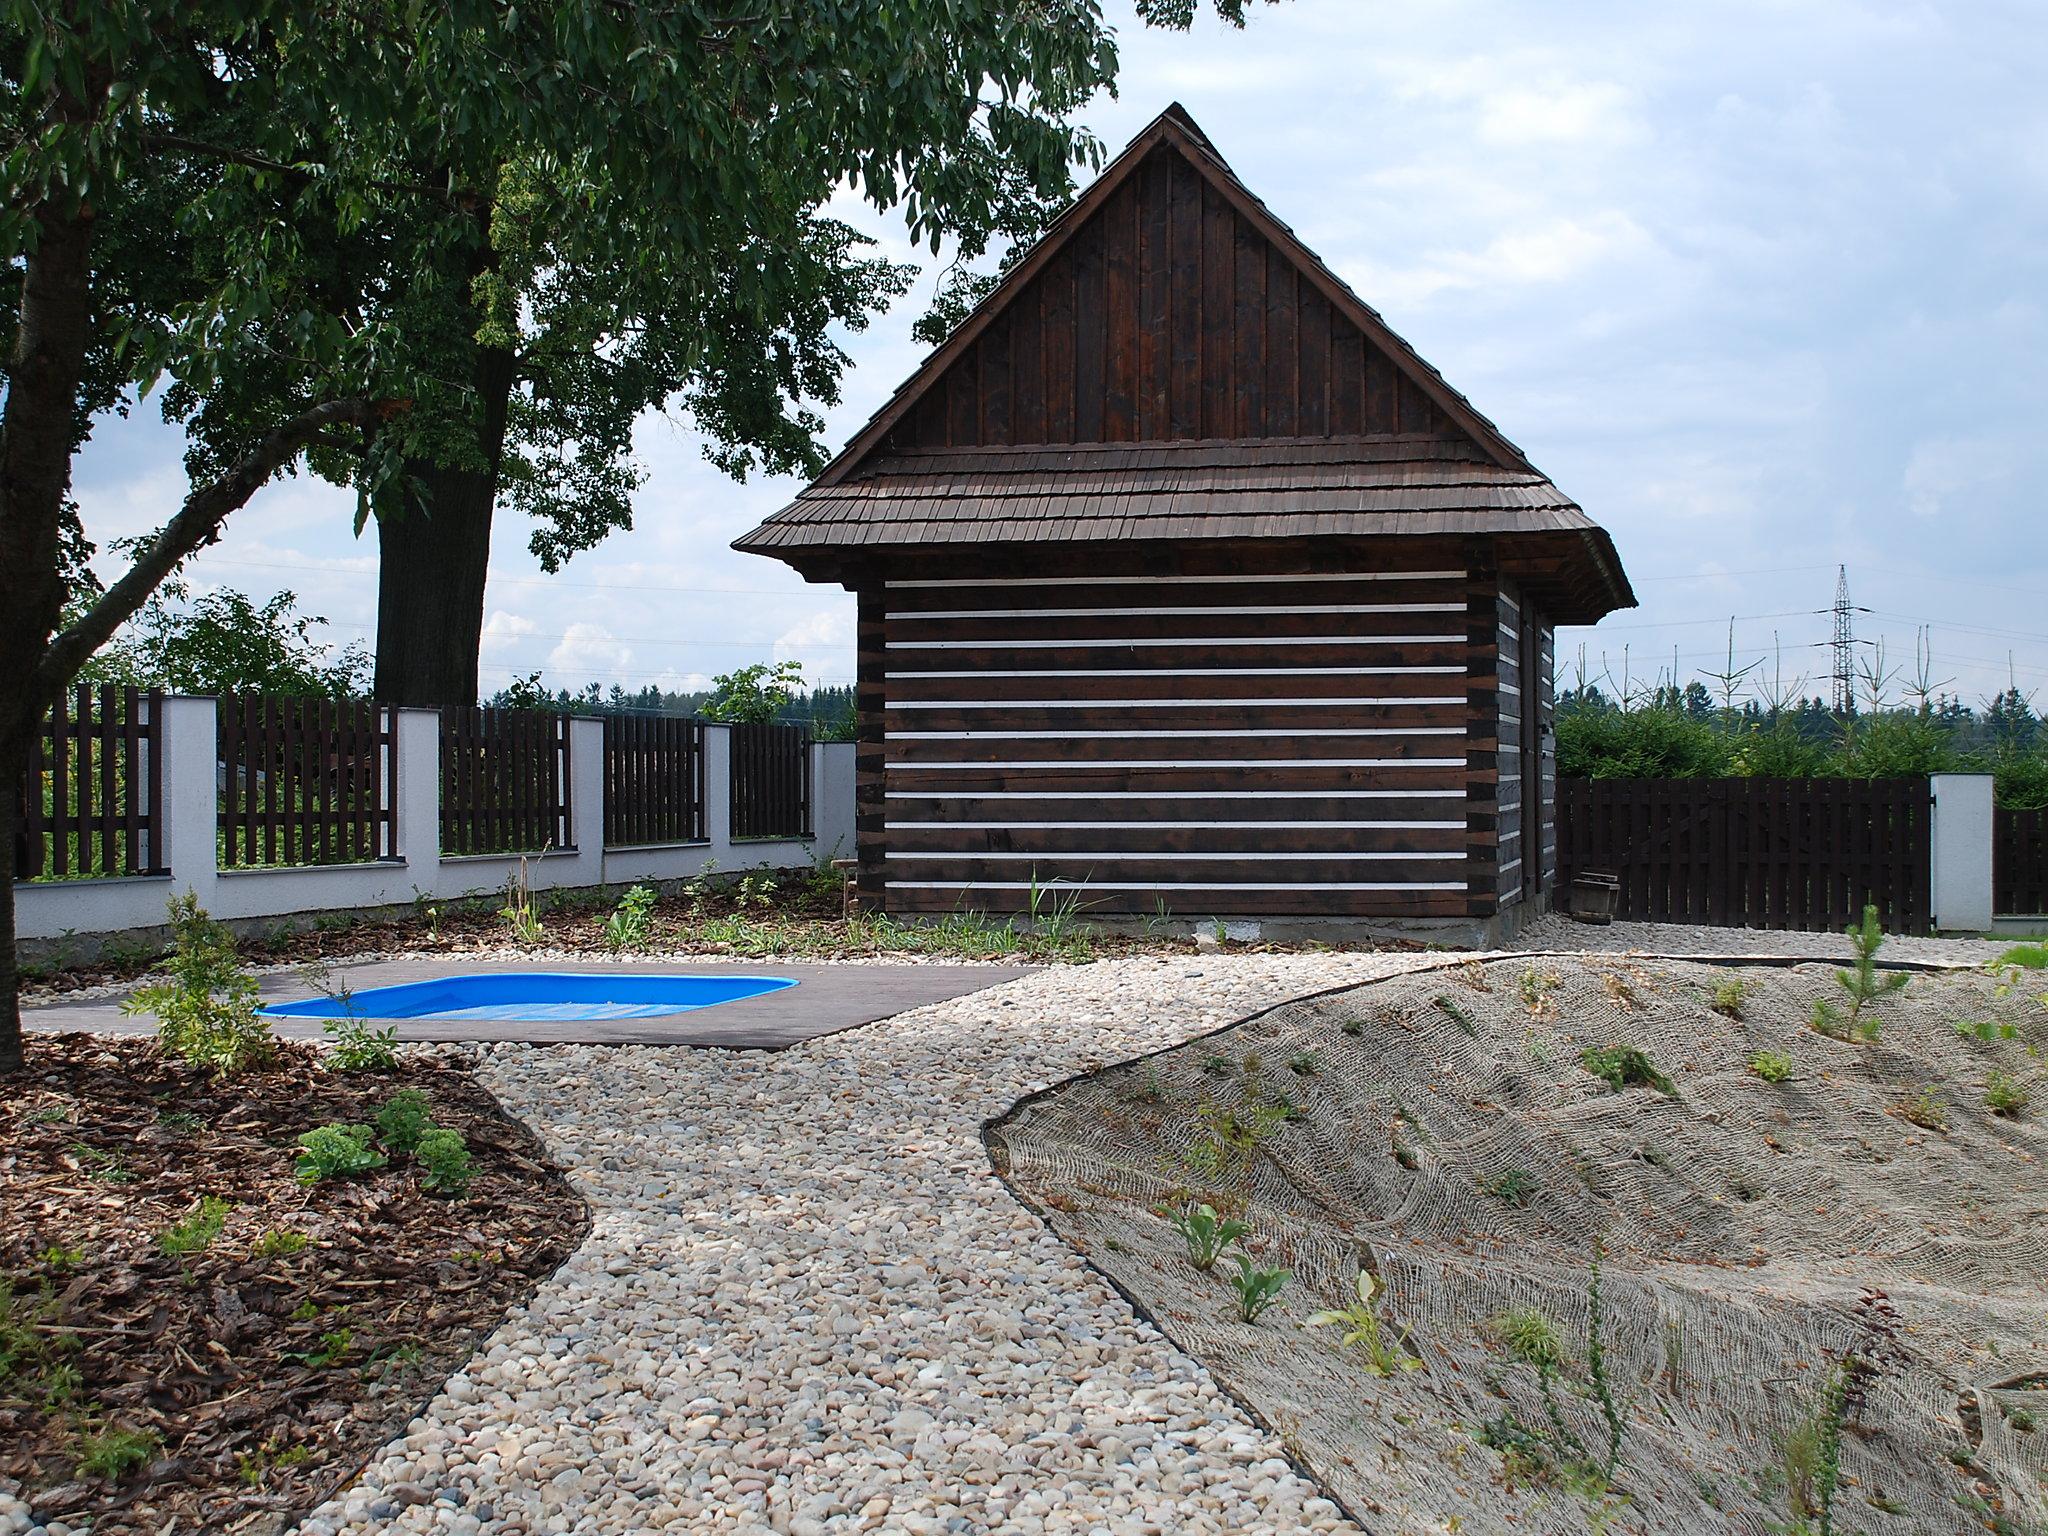 Foto 36 - Casa con 5 camere da letto a Holetín con piscina privata e giardino